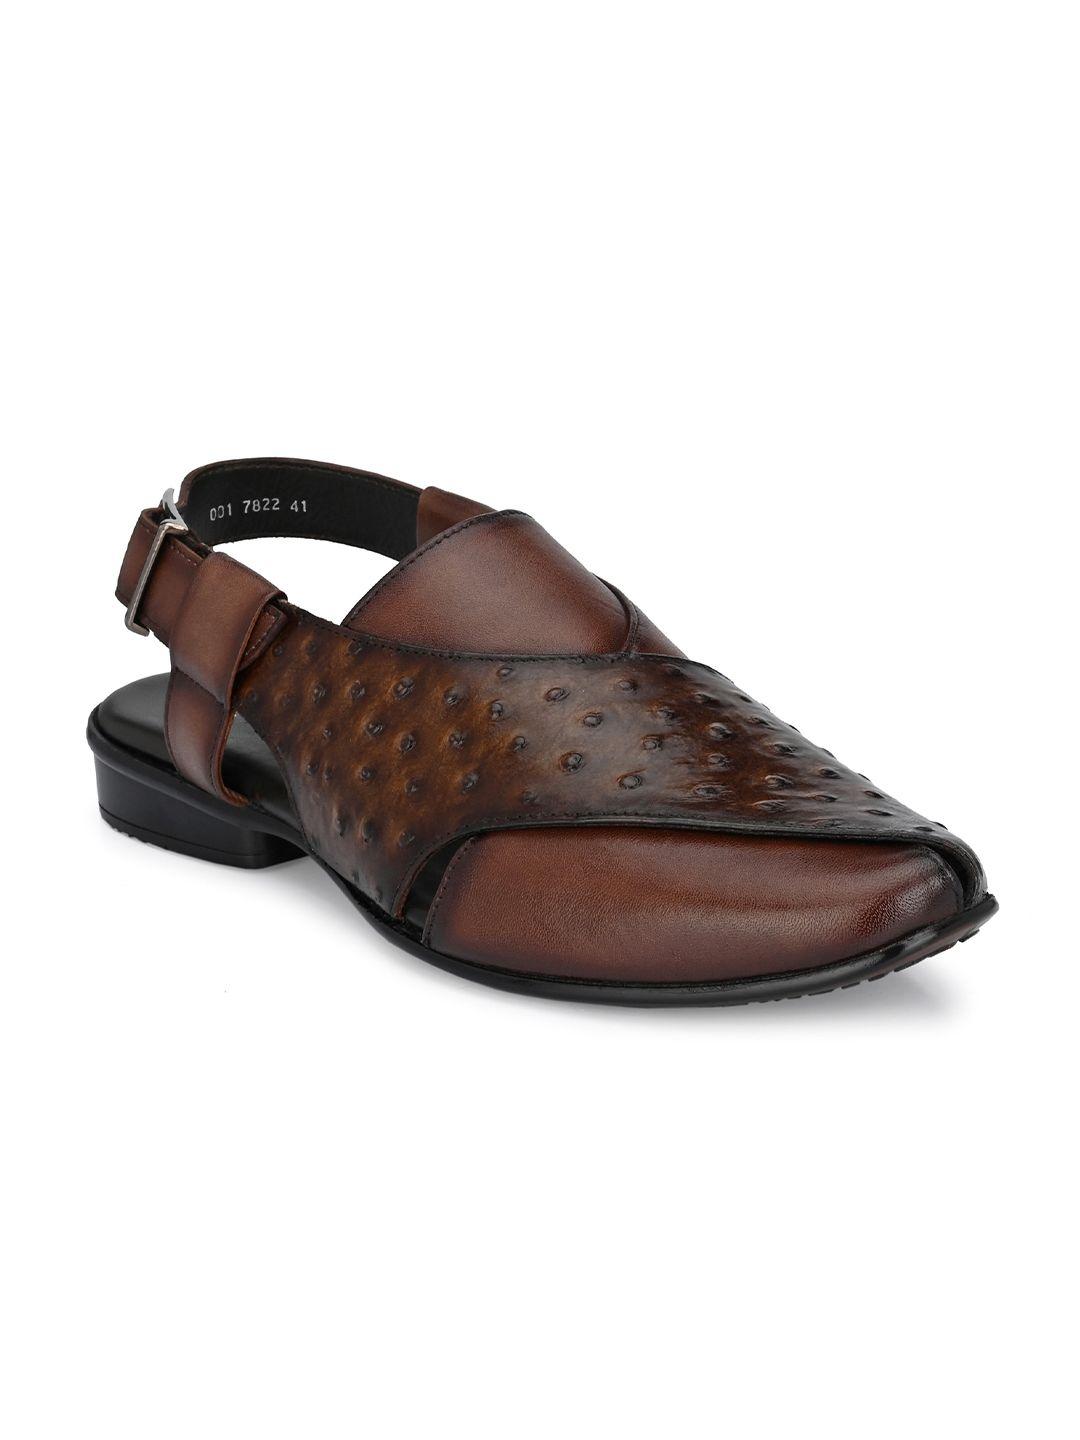 hitz-men-brown-&-black-leather-shoe-style-sandals